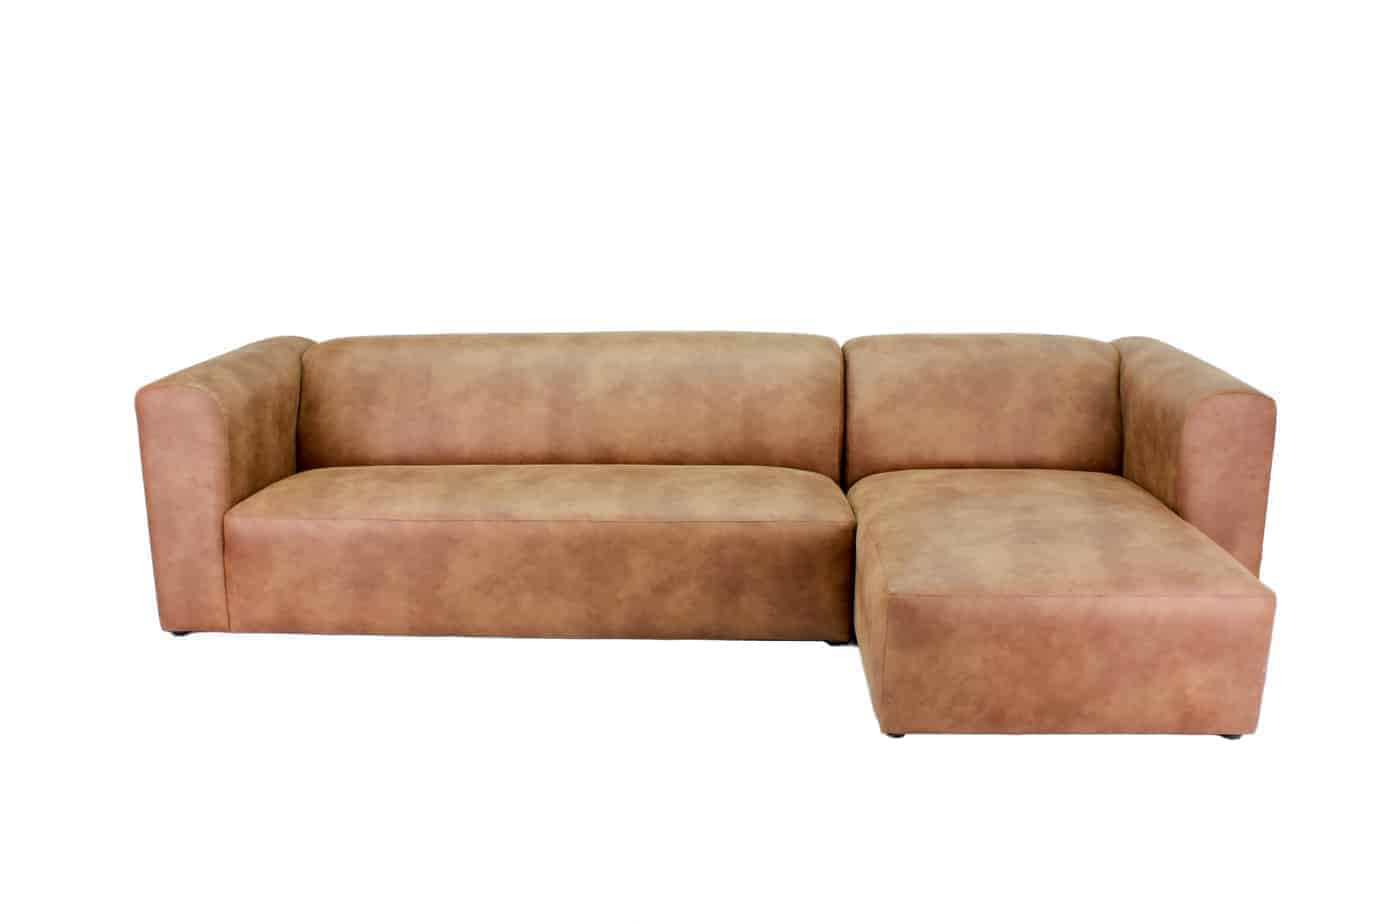 chaise sofa bed australia